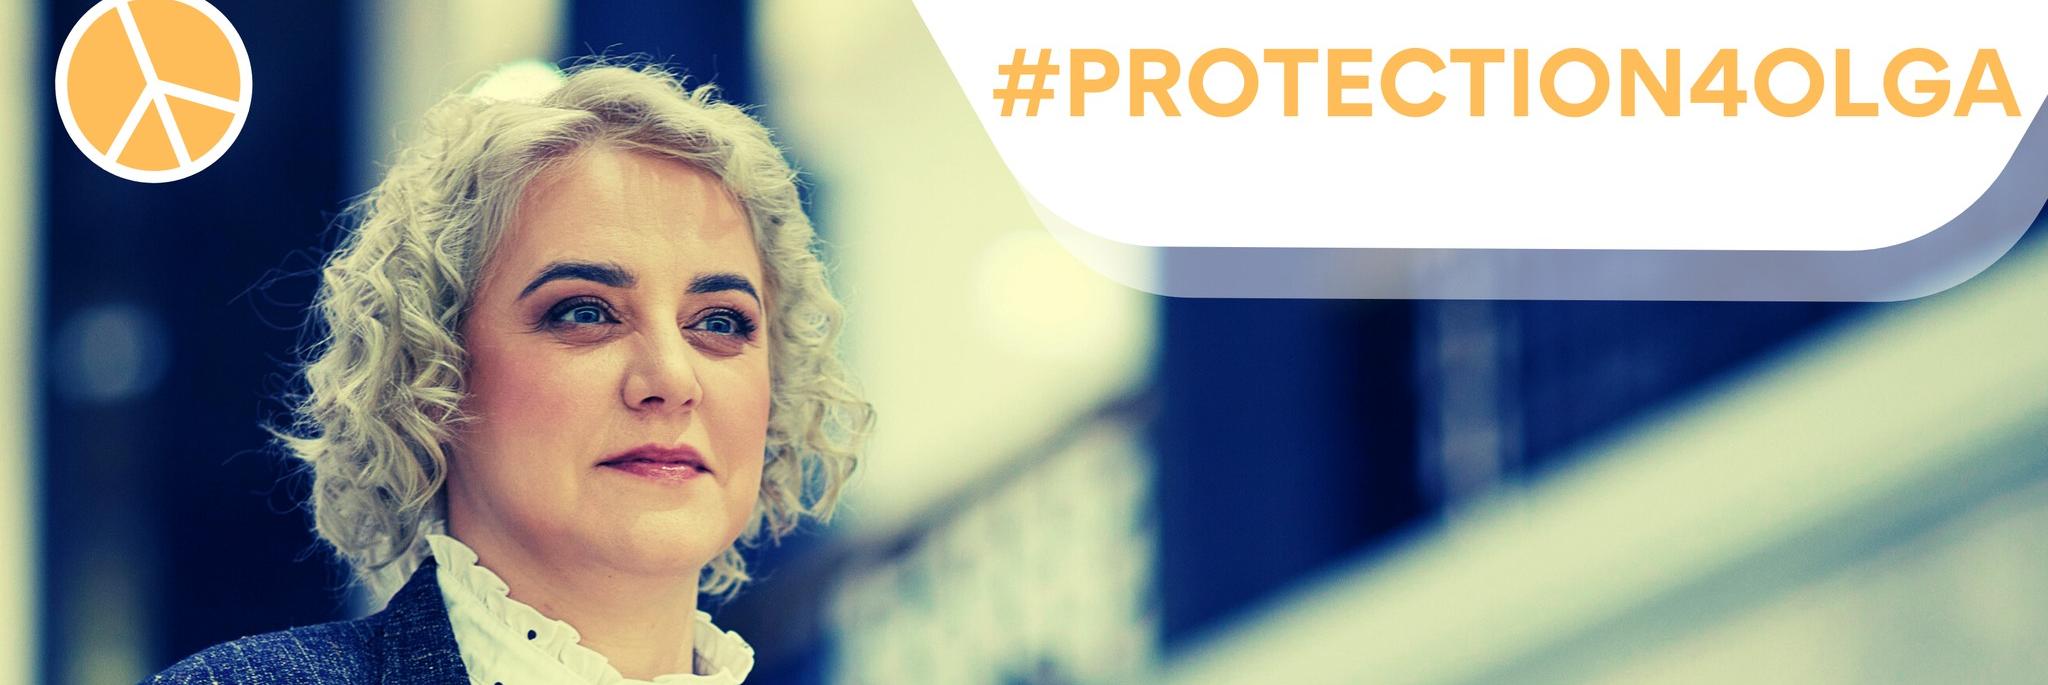 Olga Karatch. Teksti: Protect and grant asylum to human rights defender Olga Karatch!